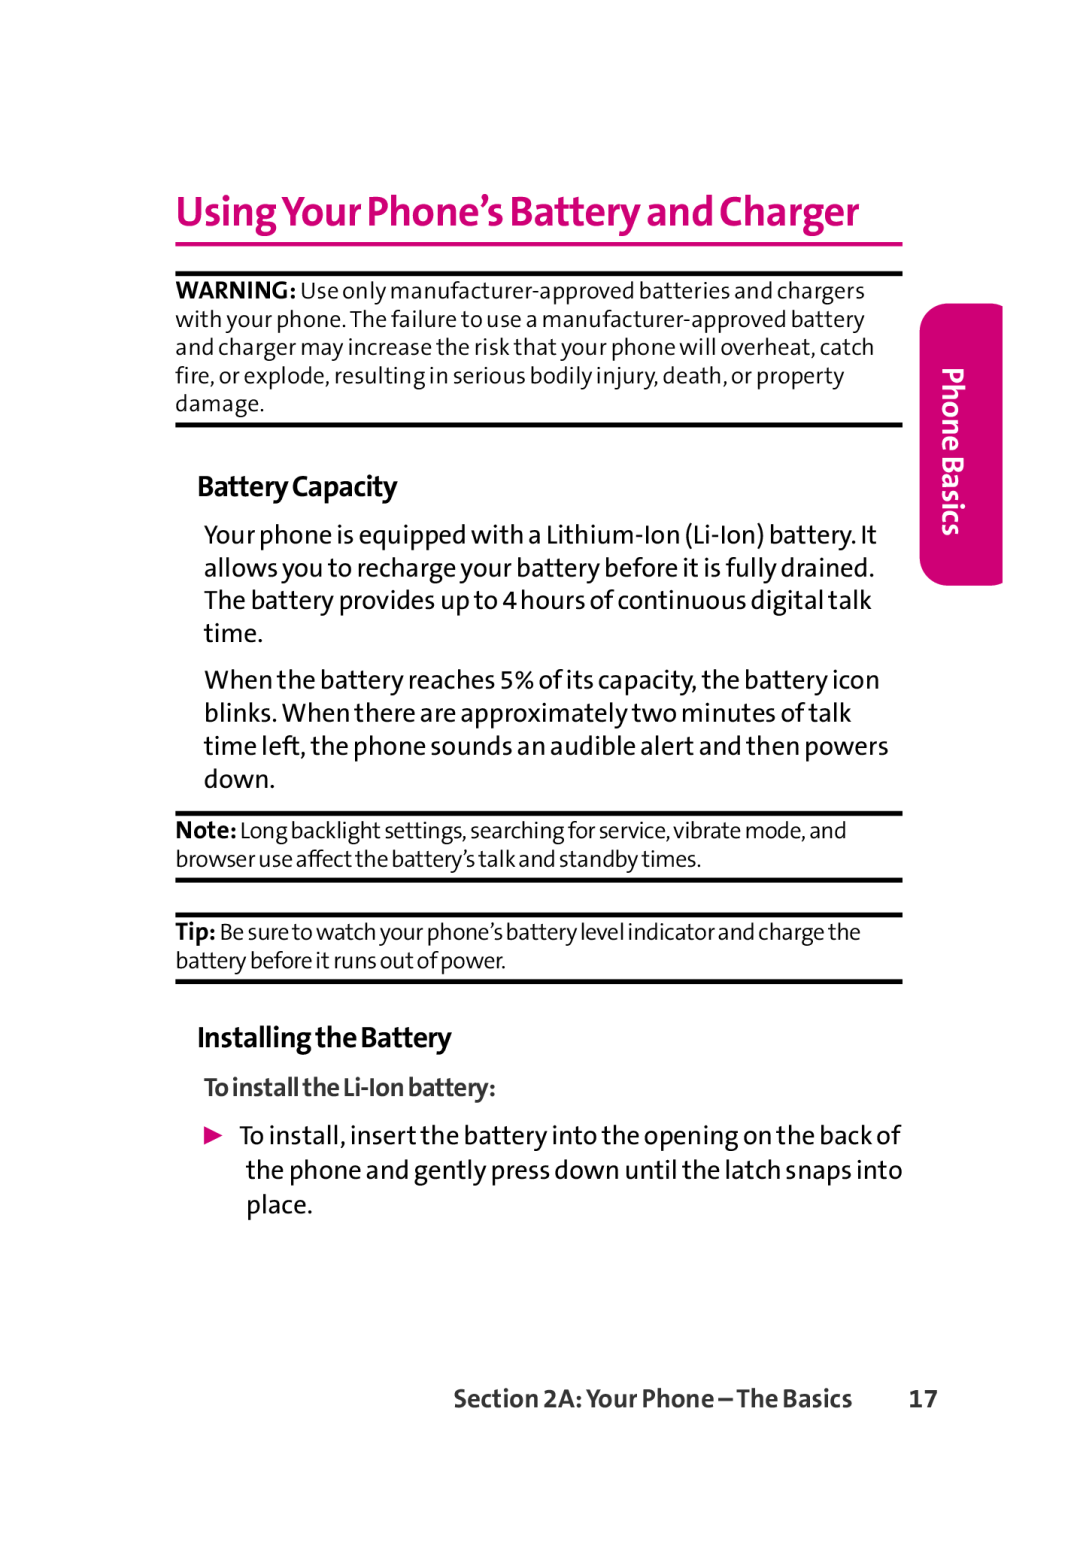 LG Electronics 350 UsingYour Phone’s Batteryand Charger, BatteryCapacity, InstallingtheBattery, ToinstalltheLi-Ionbattery 